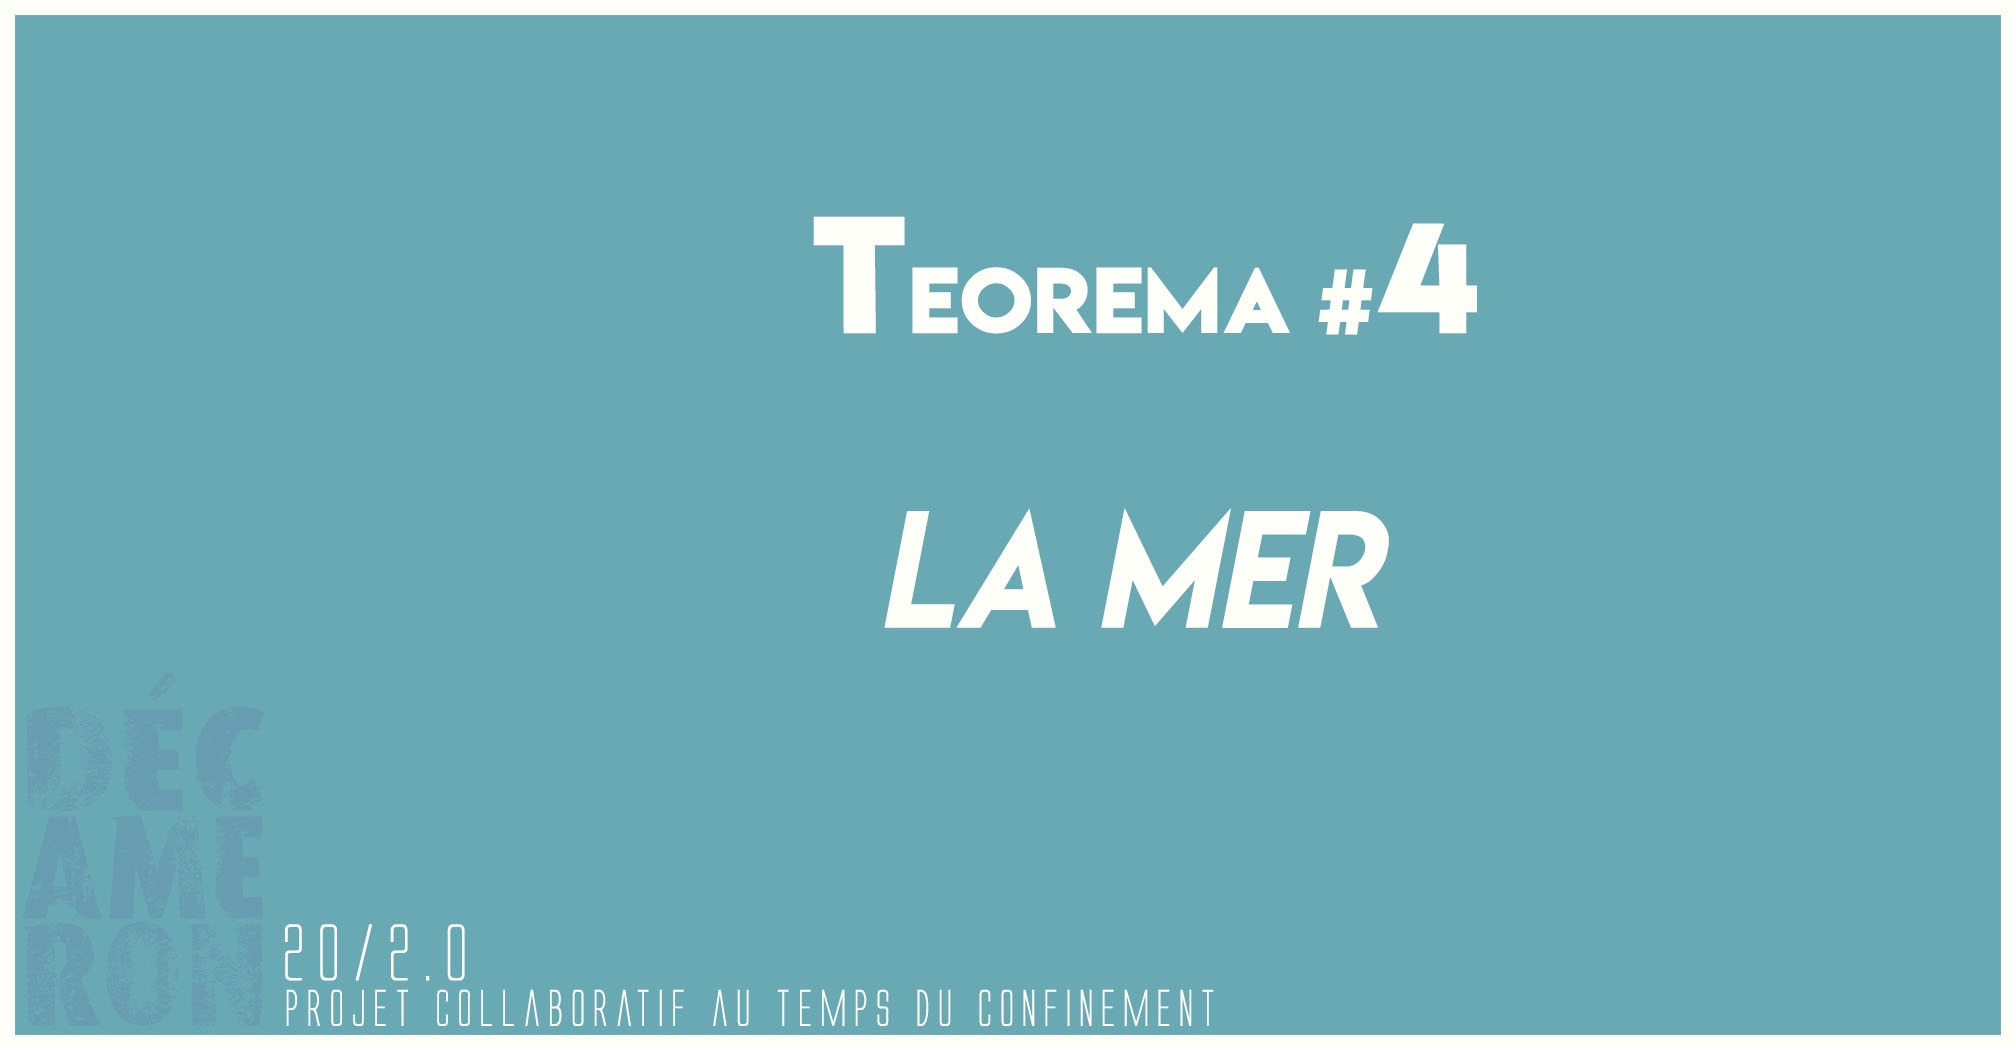 Teorema #4 - La mer